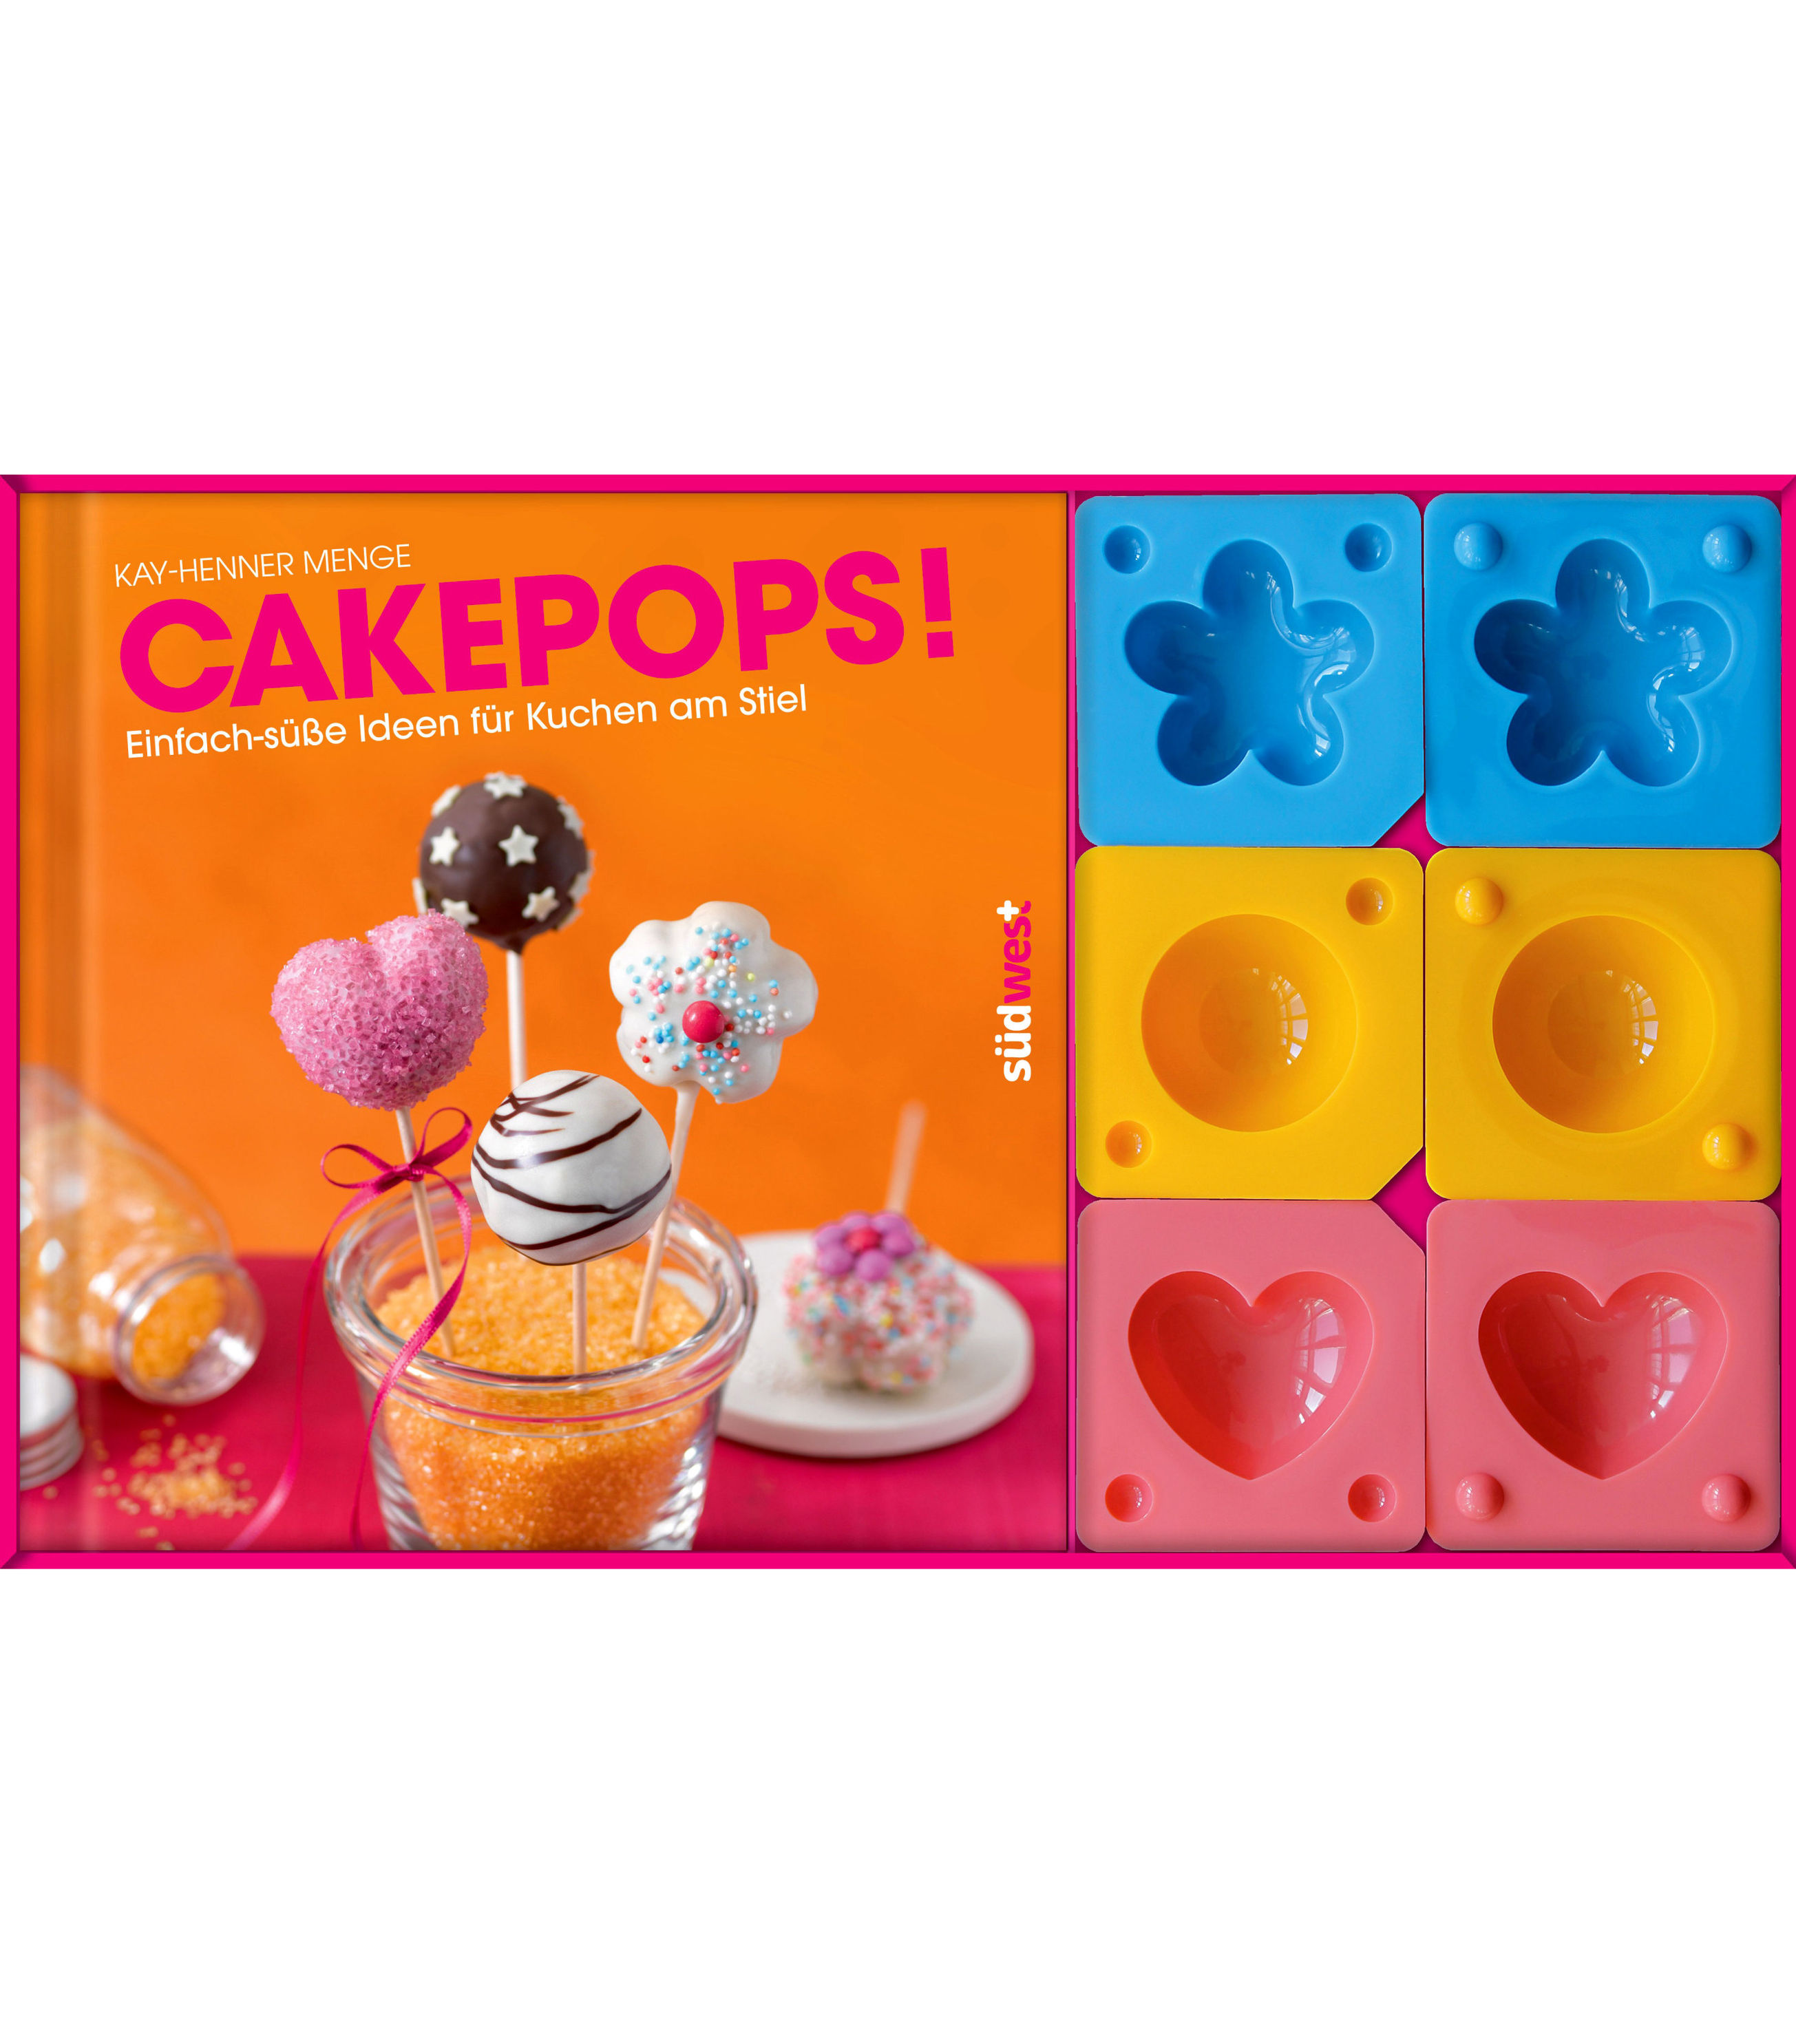 Kommentare zu Cakepops-Set, mit 3 Cakepop-Formen - Weltbild.de